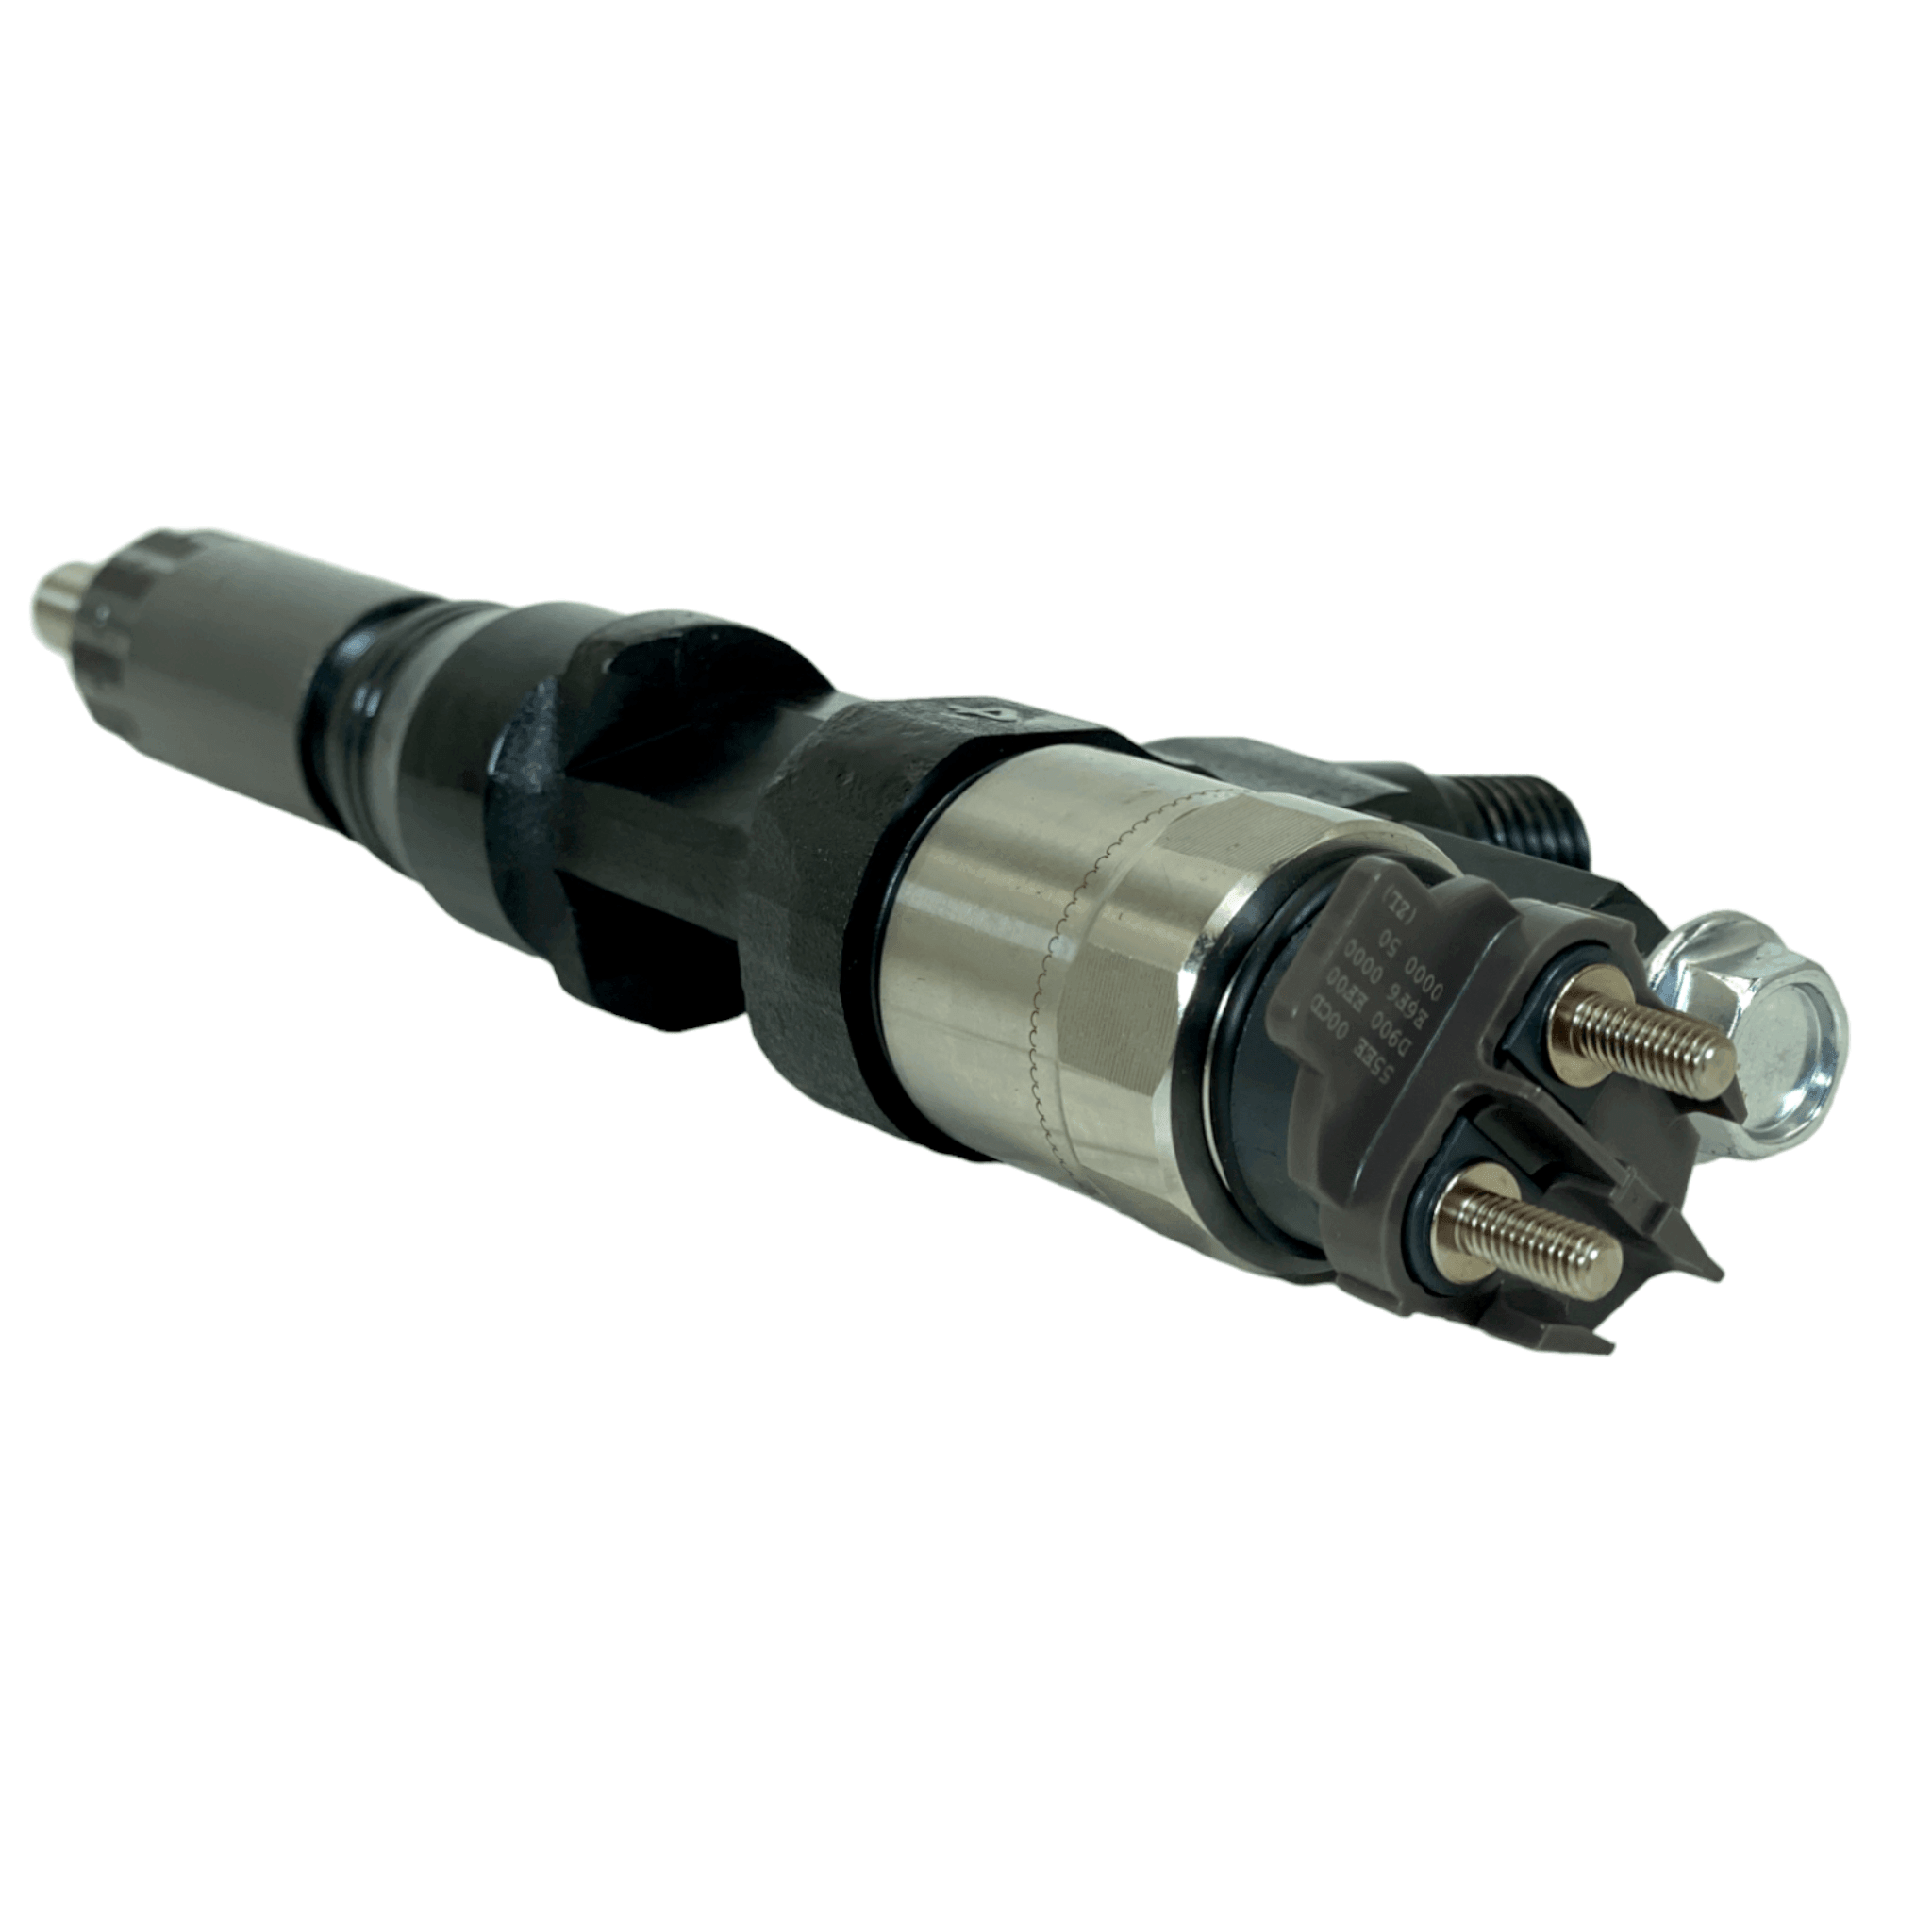 095000-8097 Genuine Hino Fuel Injector - ADVANCED TRUCK PARTS